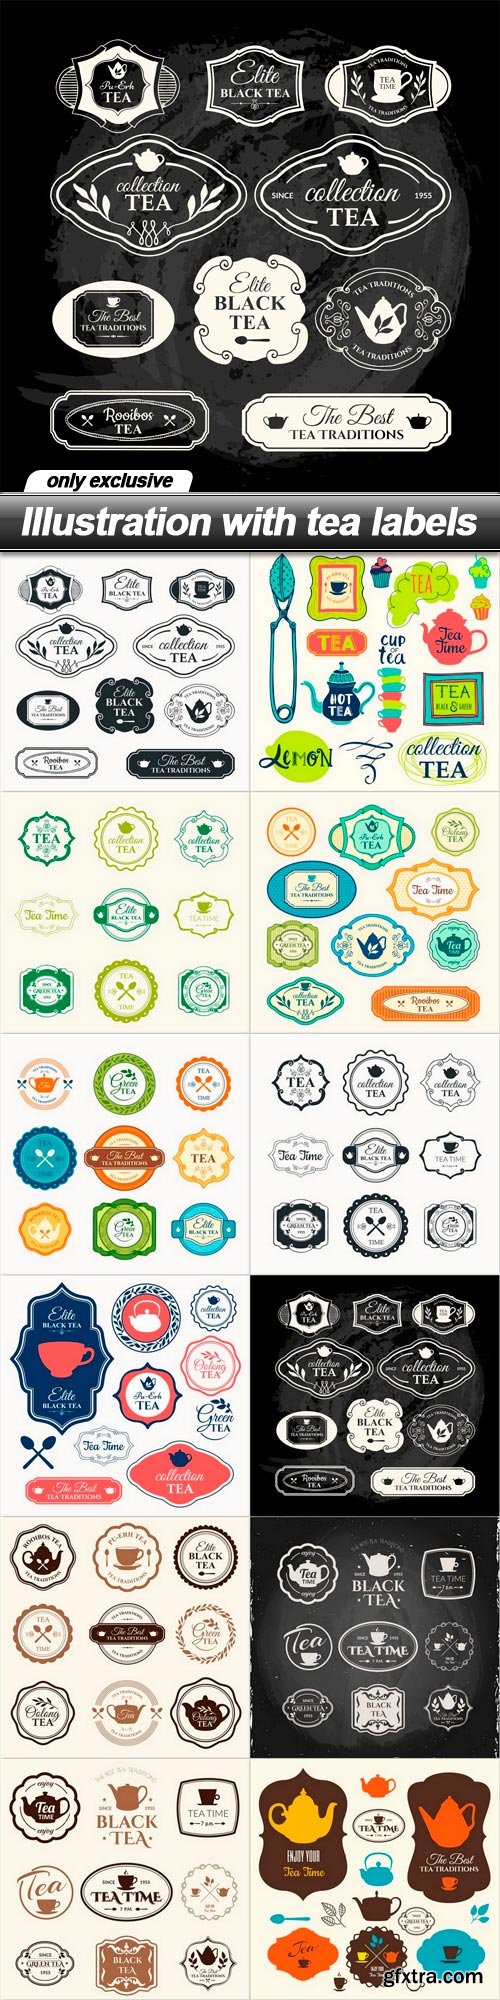 Illustration with tea labels - 12 EPS